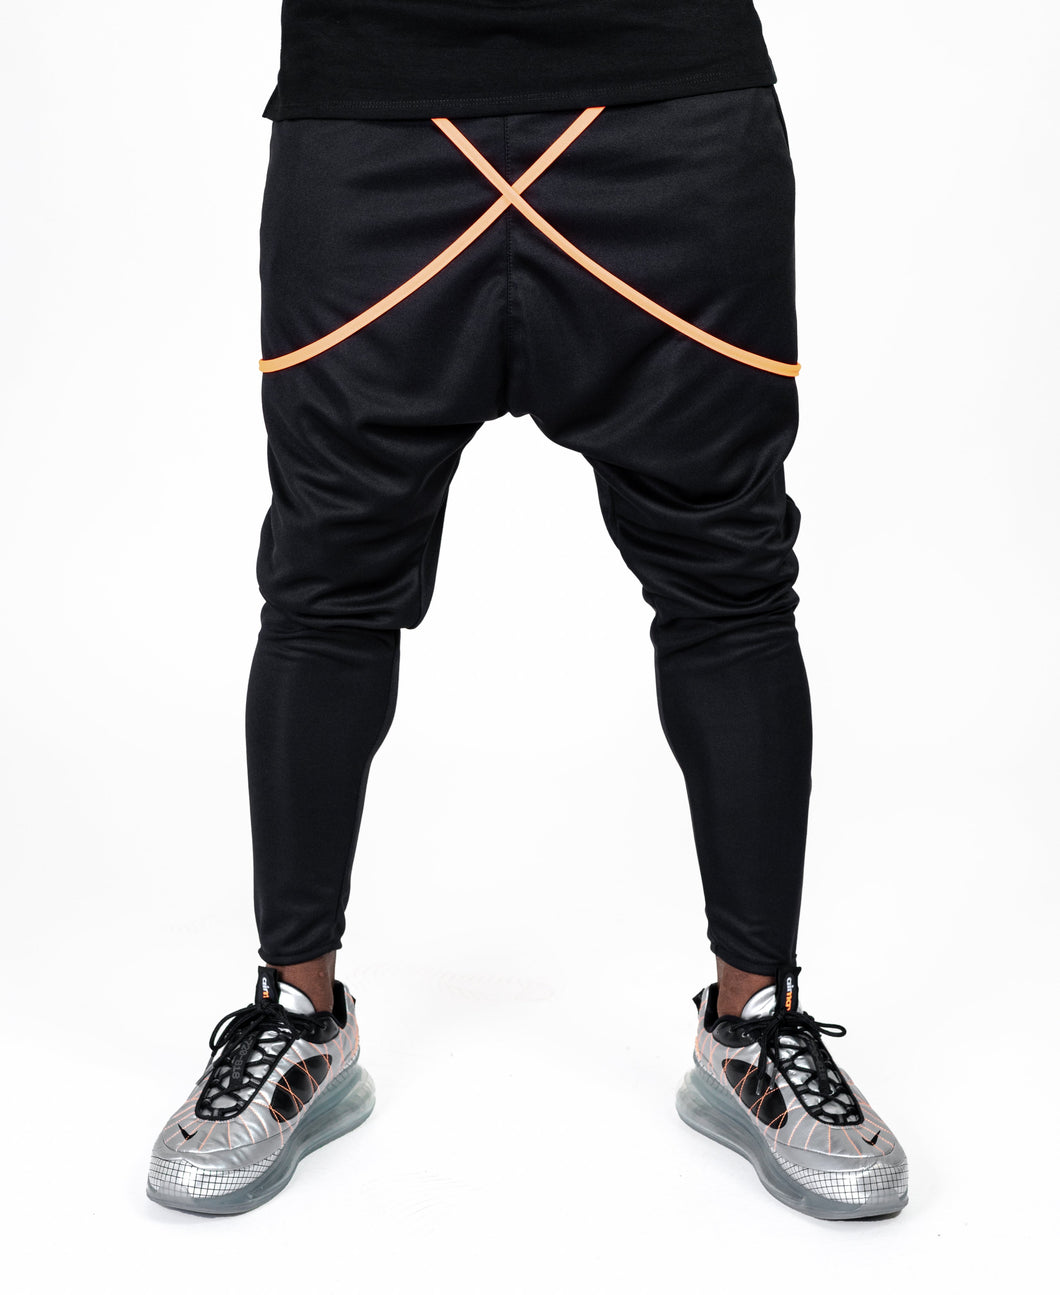 Black trousers with orange design - Fatai Style